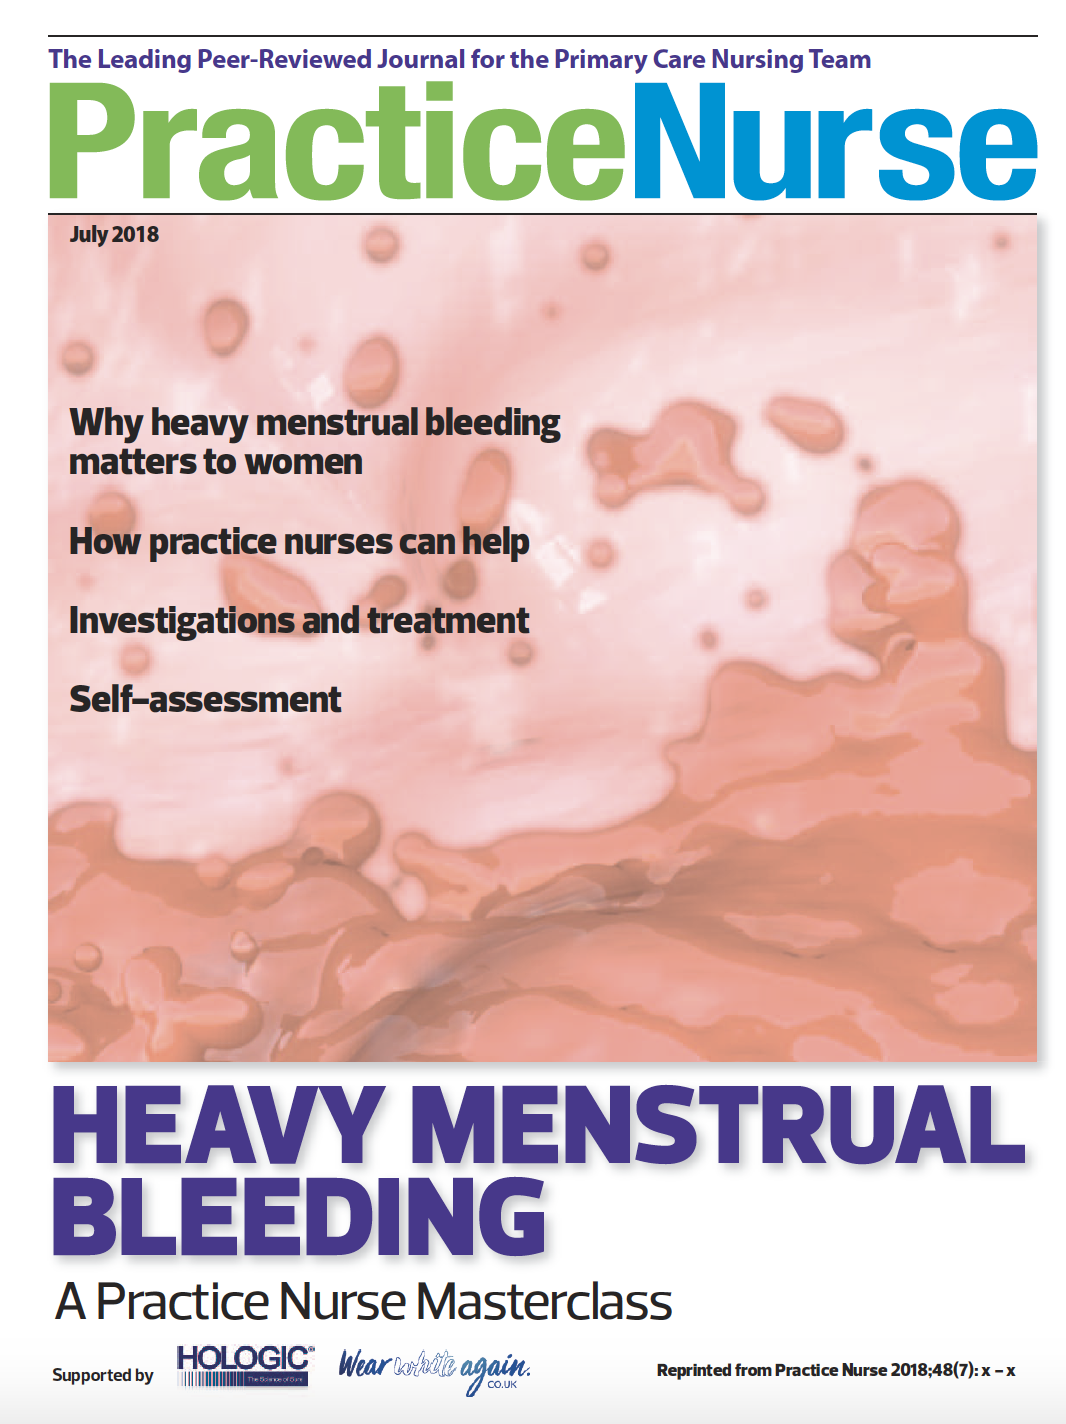 Practice nurse magazine: Heavy menstrual bleeding